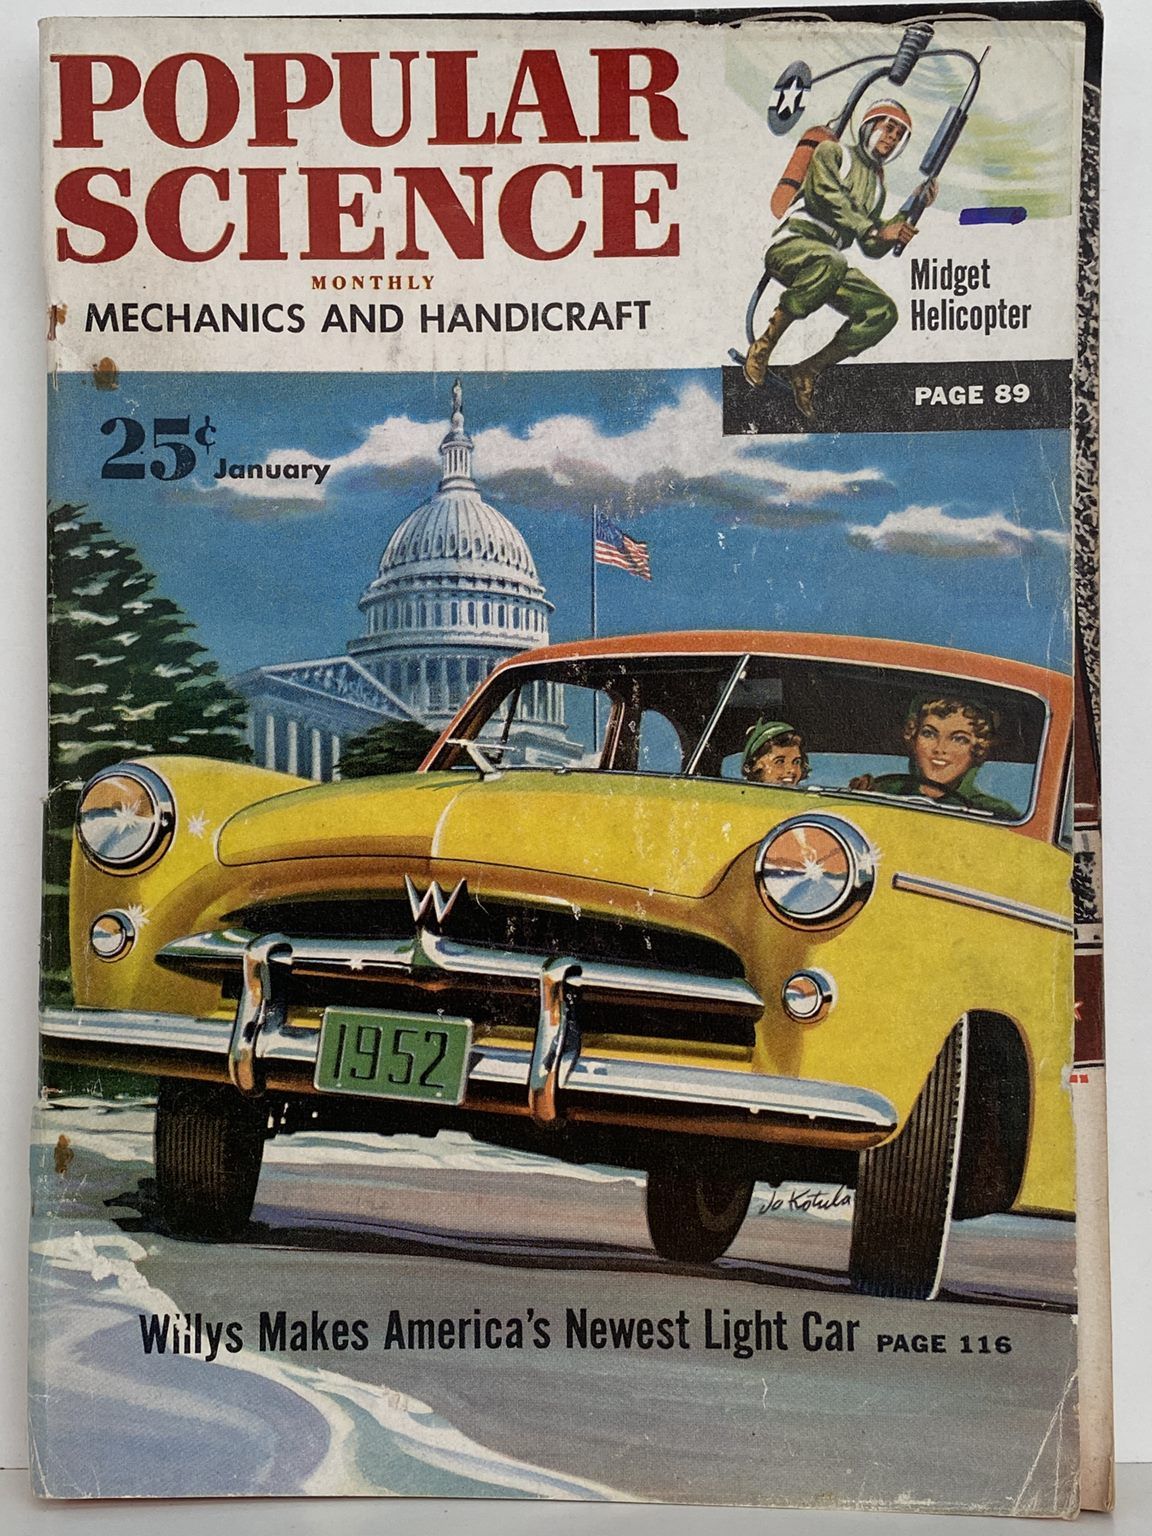 VINTAGE MAGAZINE: Popular Science, Vol 160, No. 1 - January 1952